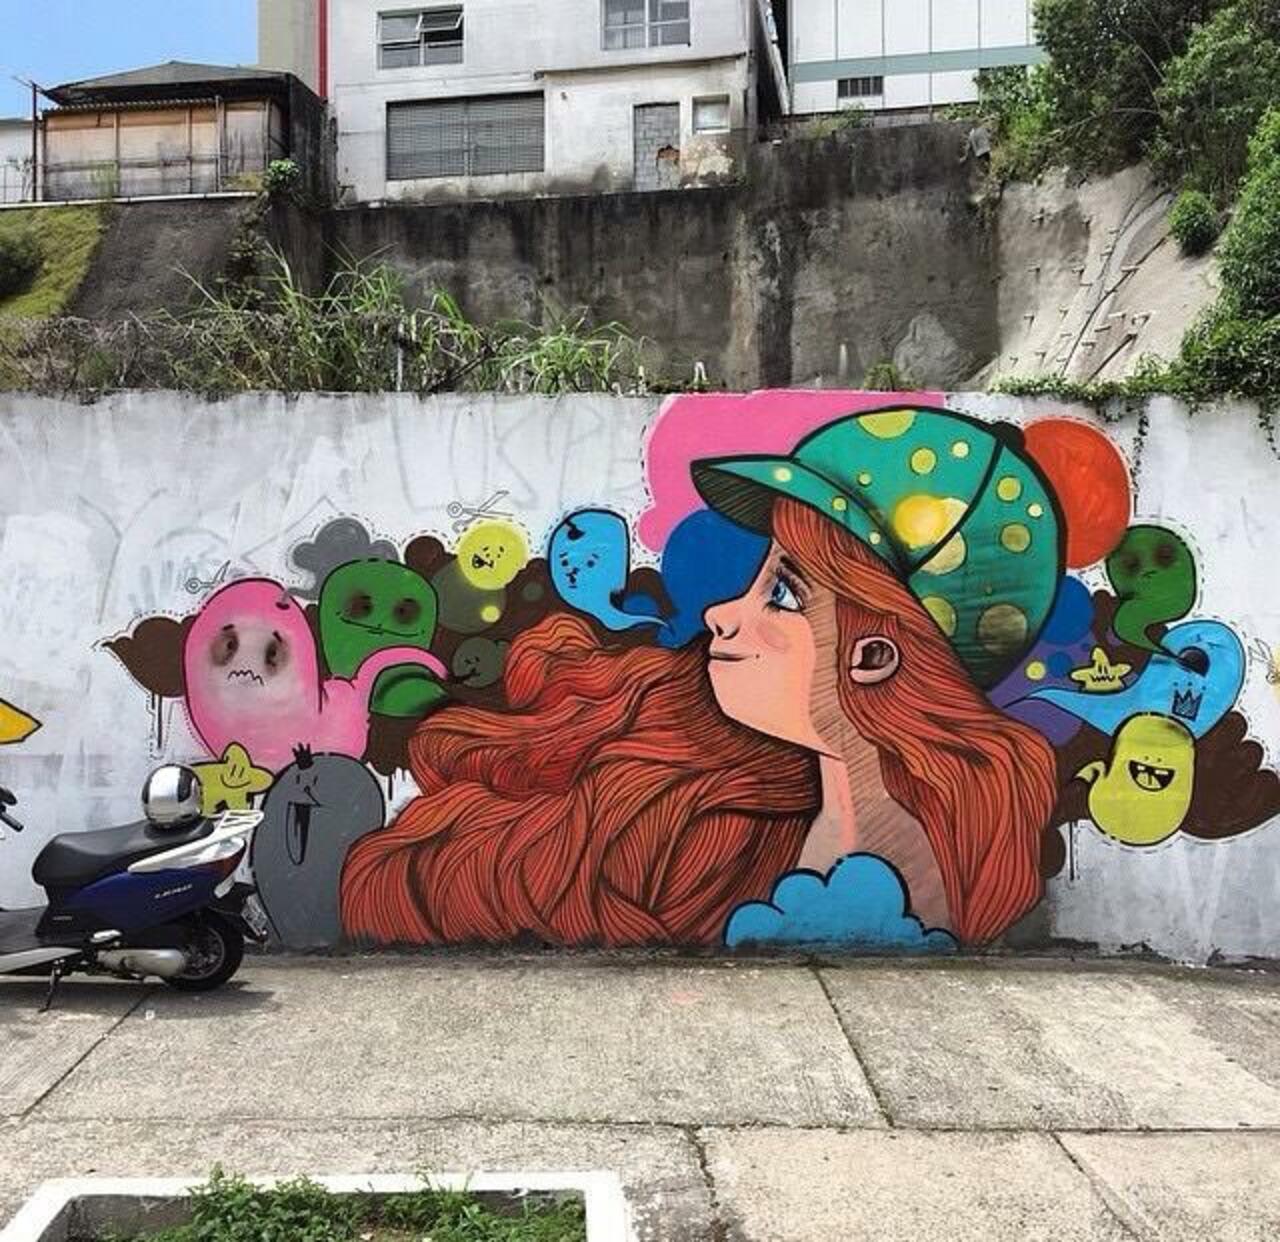 Endearing Street Art by Vupulos in São Paulo, Brazil 

#art #mural #graffiti #streetart http://t.co/9e1GPqTOjS